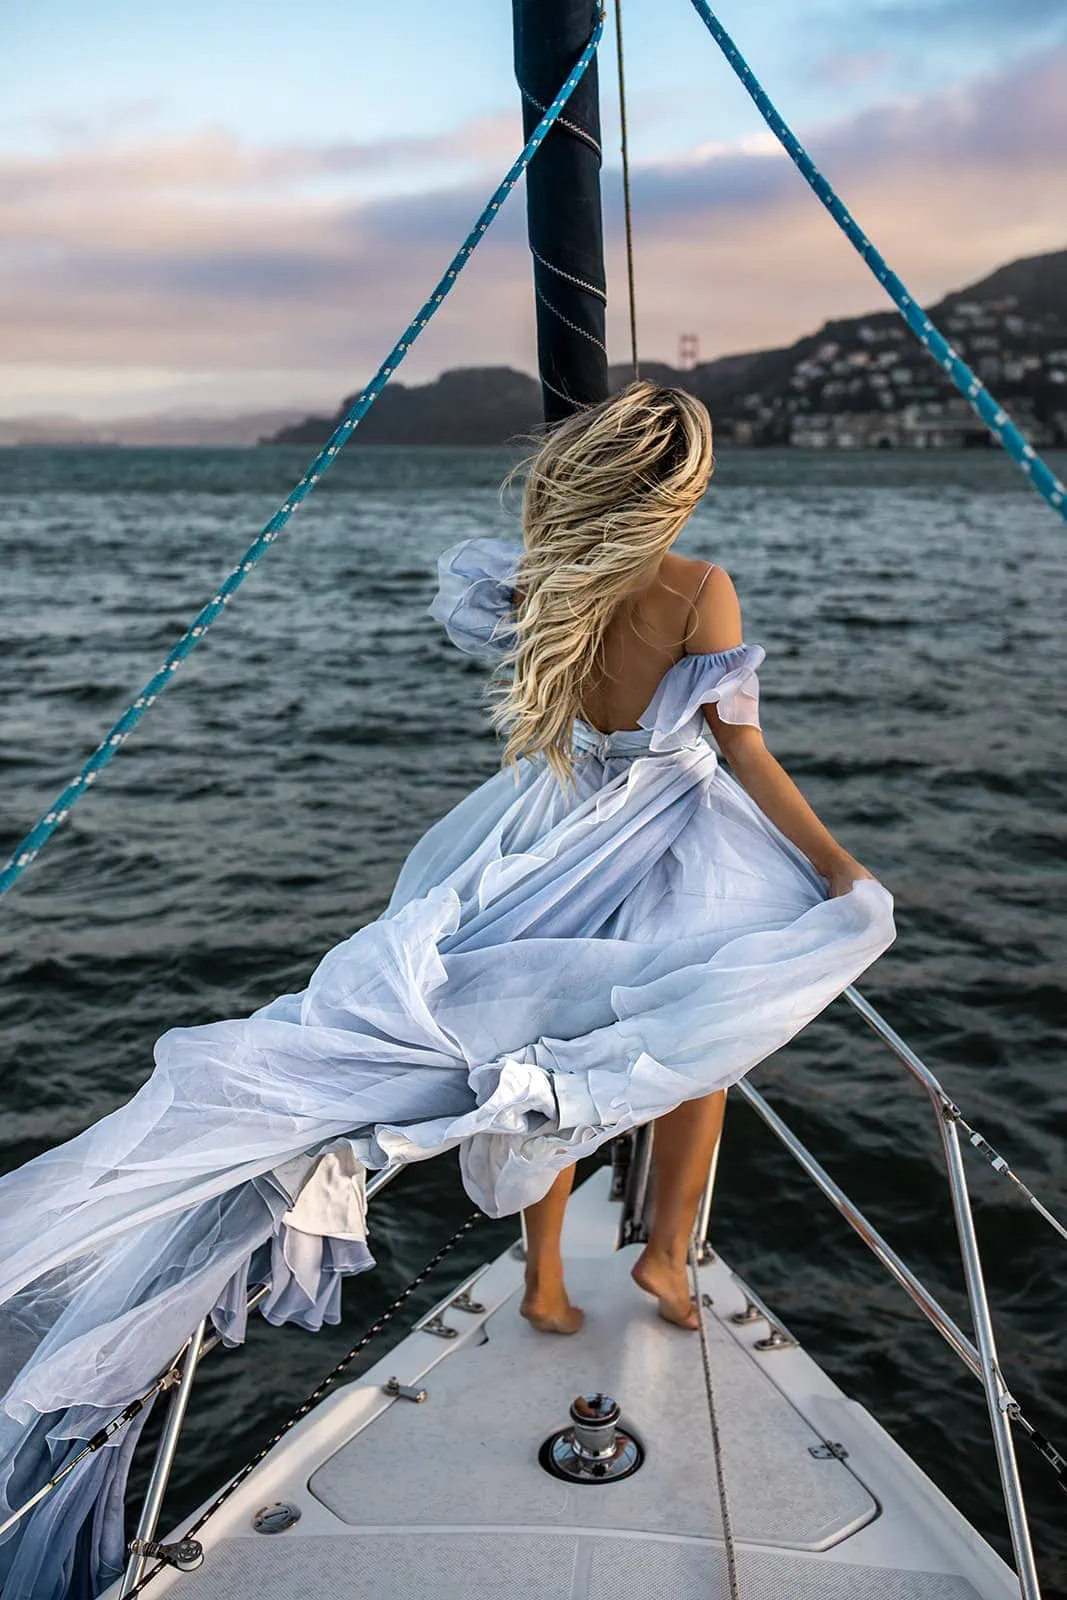 Woman on sailboat wears Leanne Marshall dress